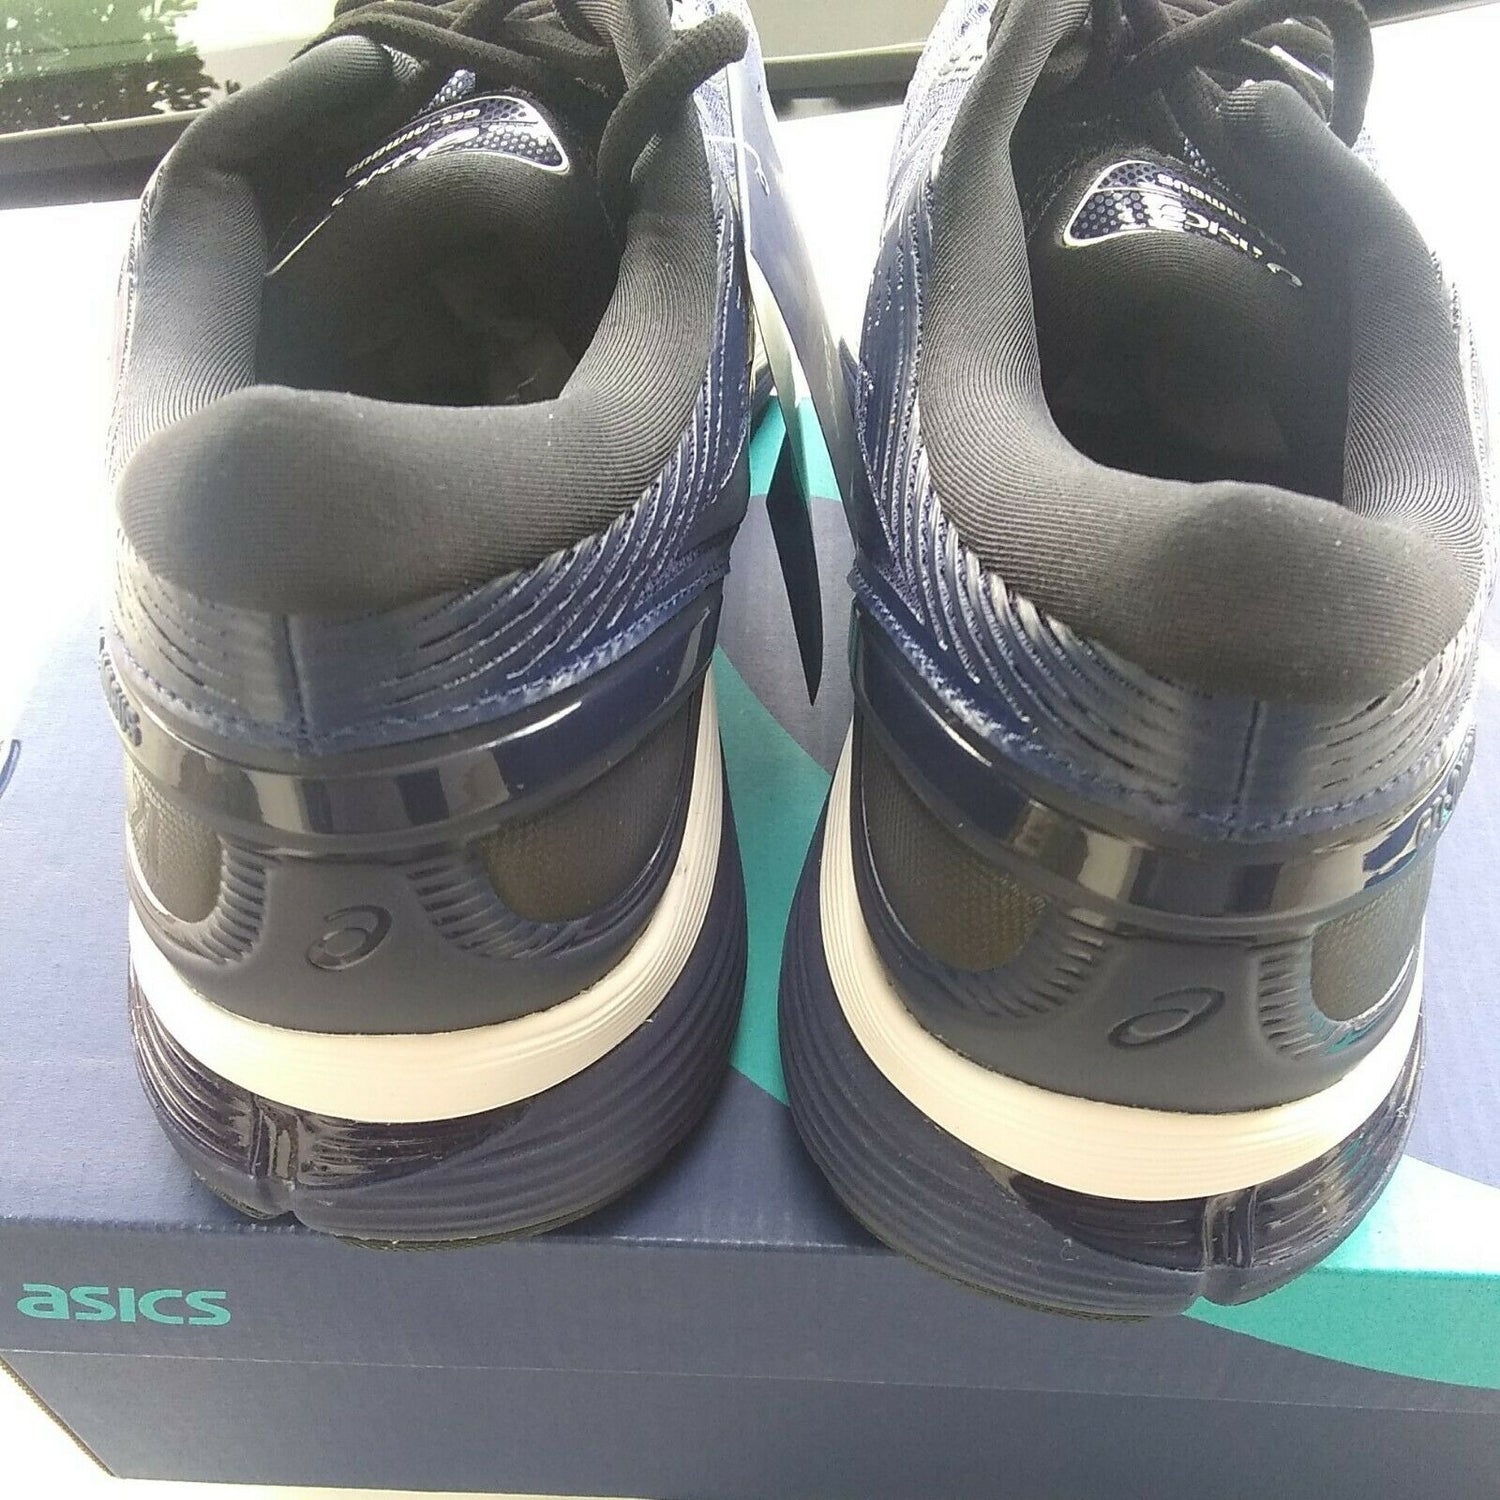 Asics men's gel-nimbus 21 running shoes size 13 us